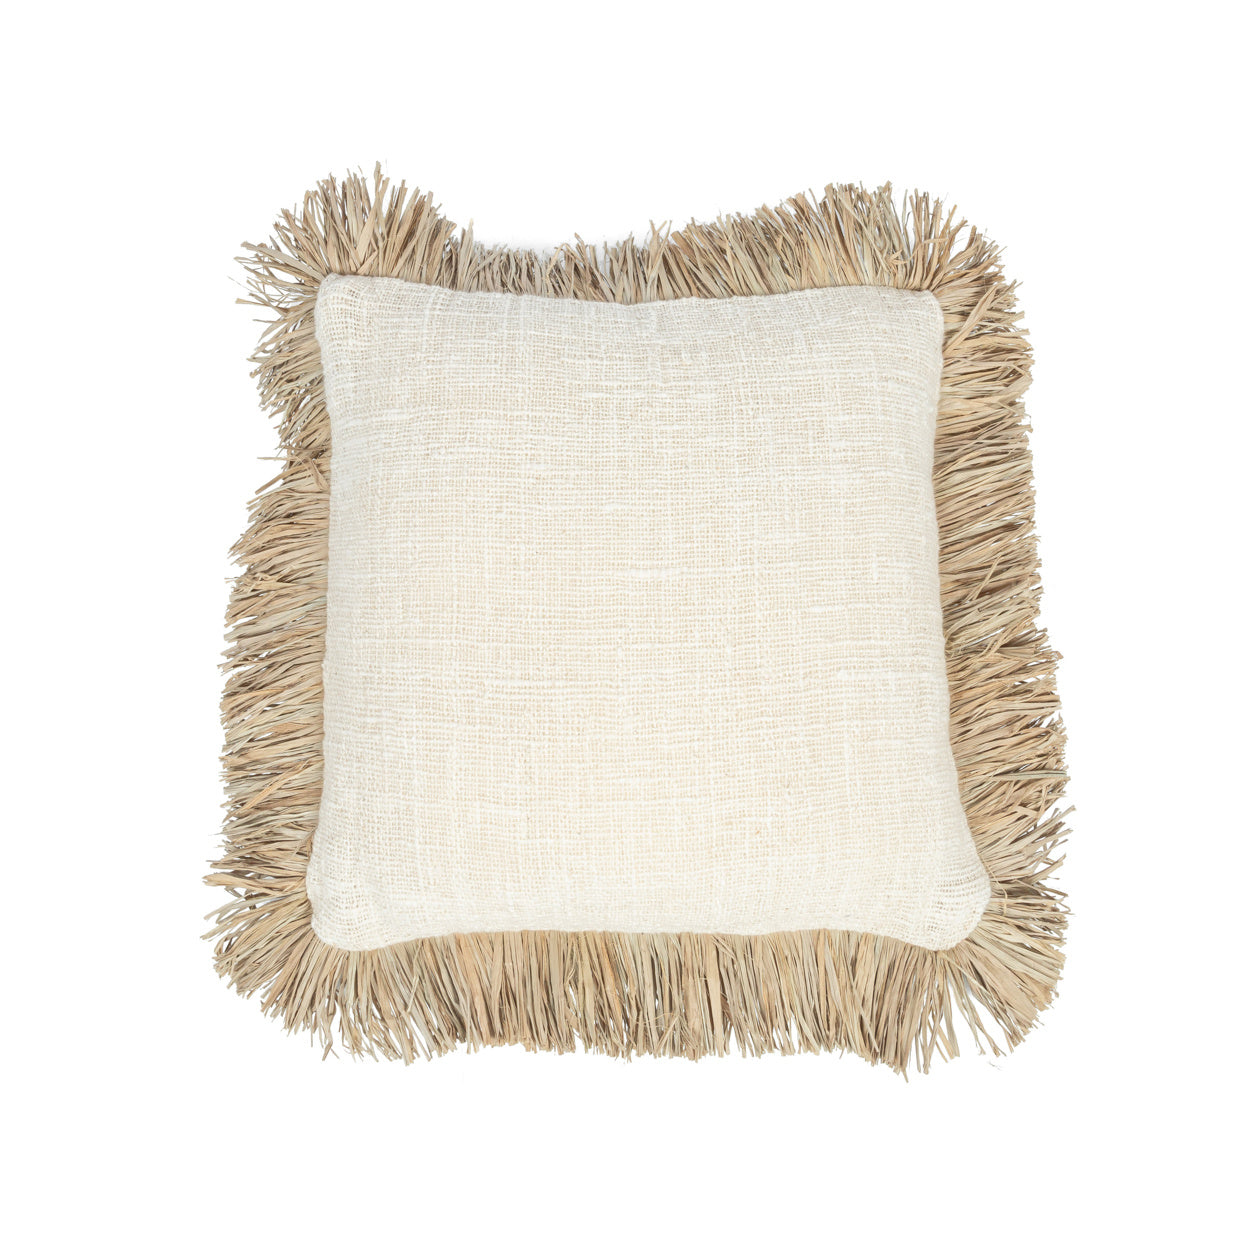 THE SAINT TROPEZ Cushion Cover Natural-White 40x40 cm front view